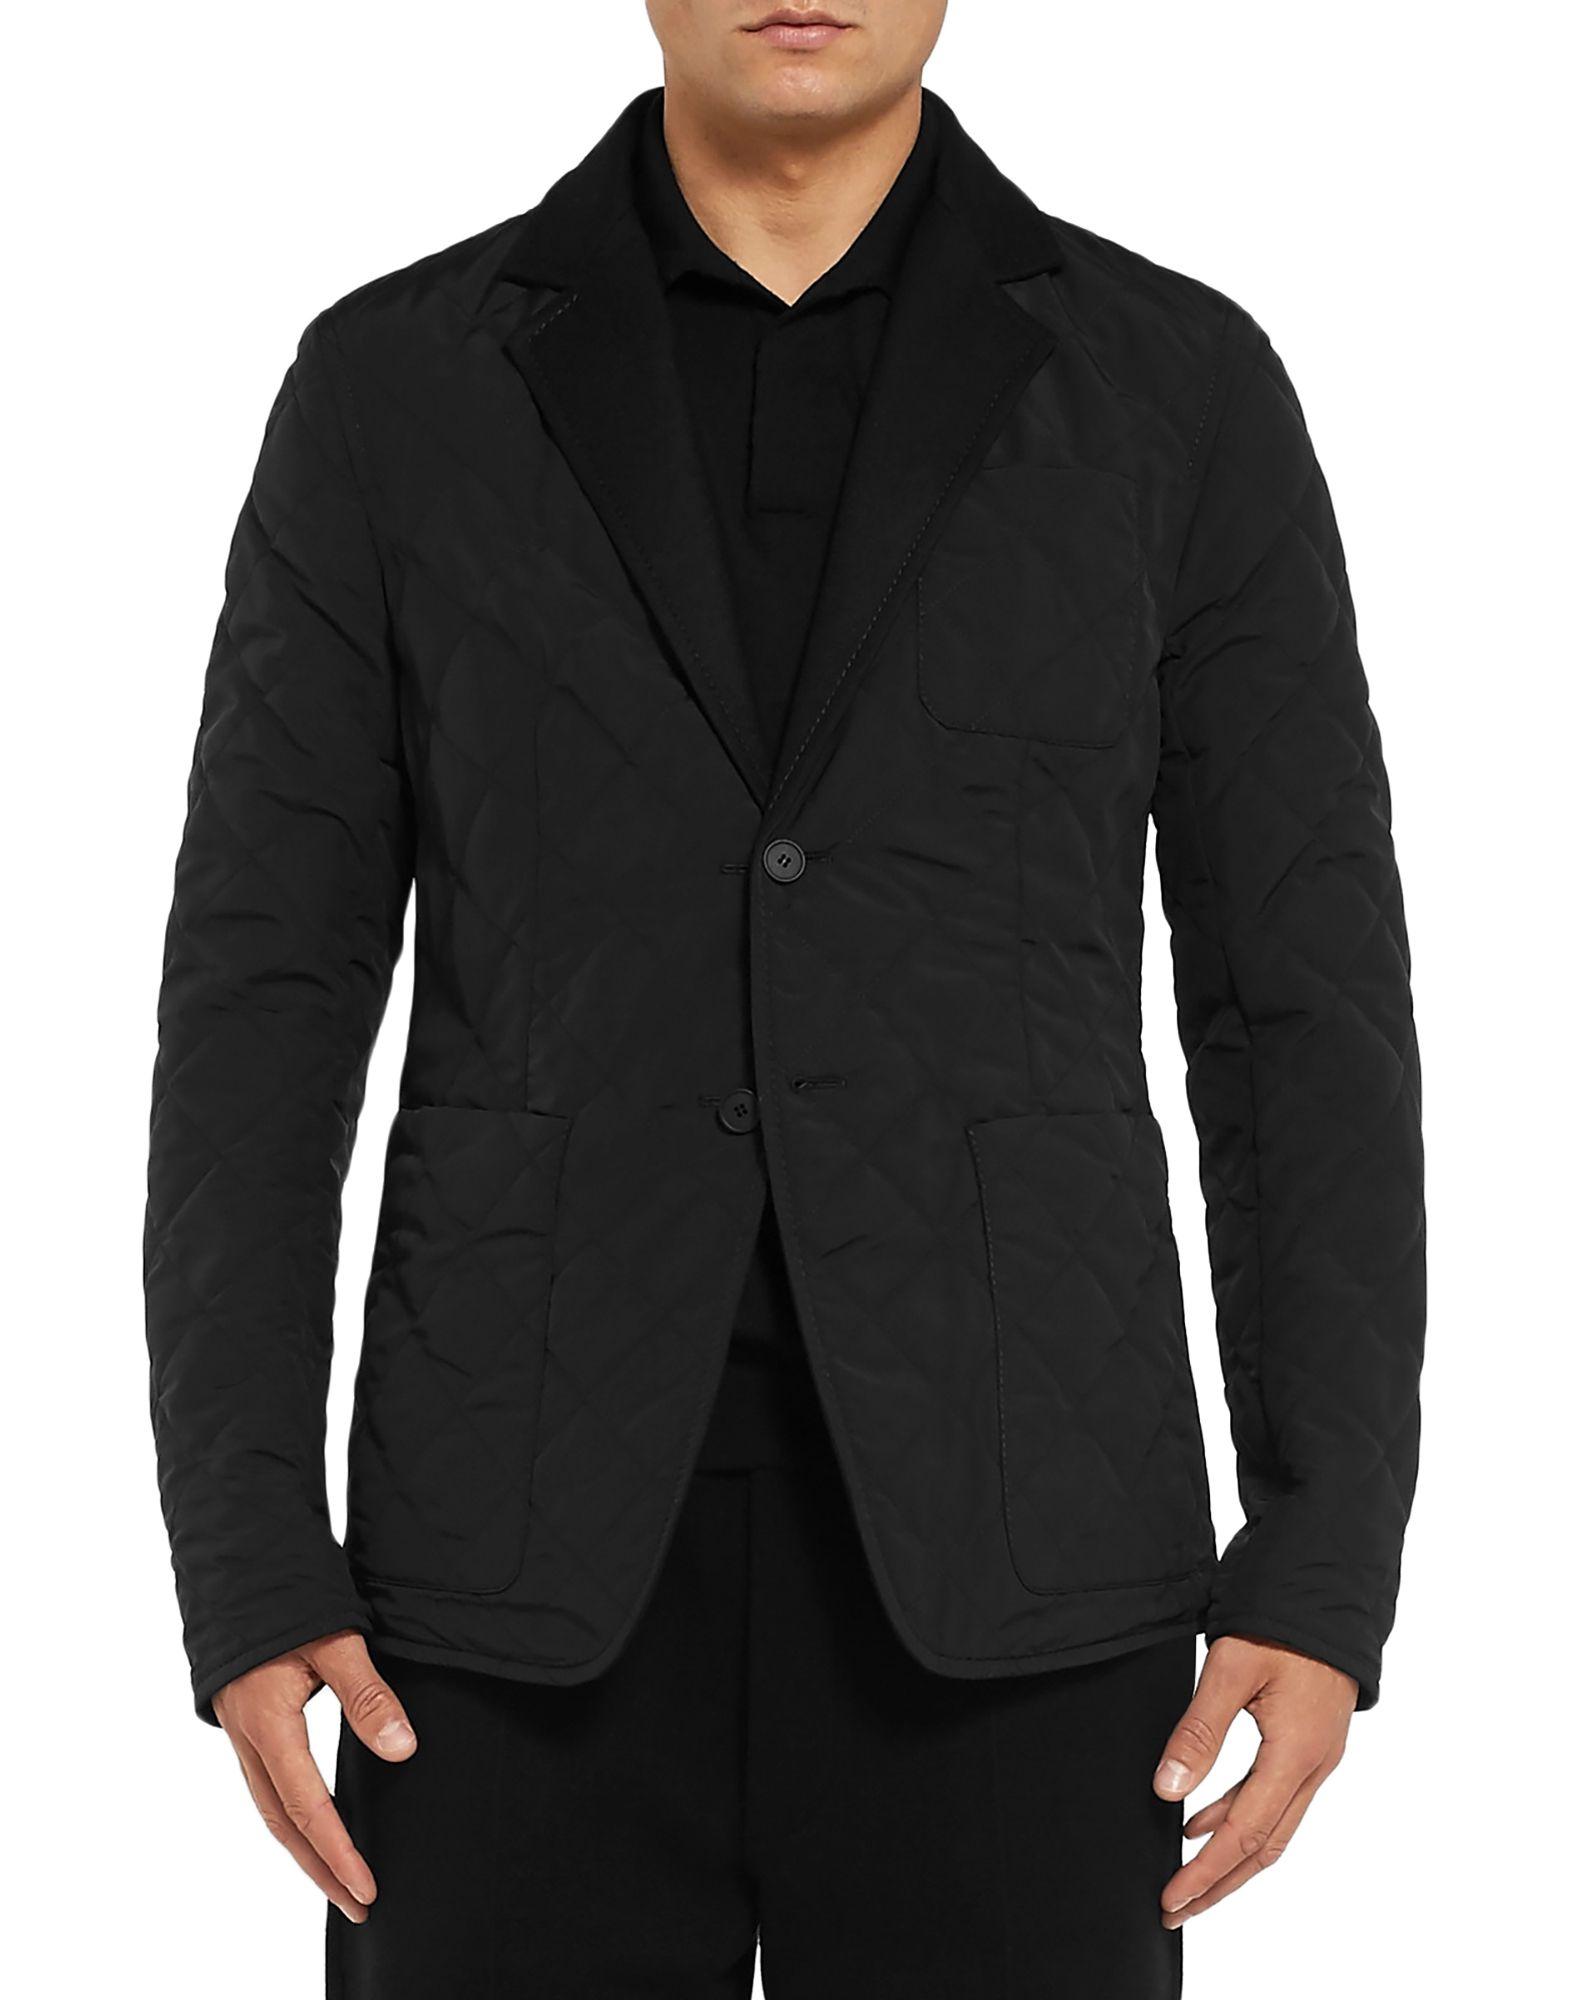 Bottega Veneta Jacket in Black for Men - Lyst